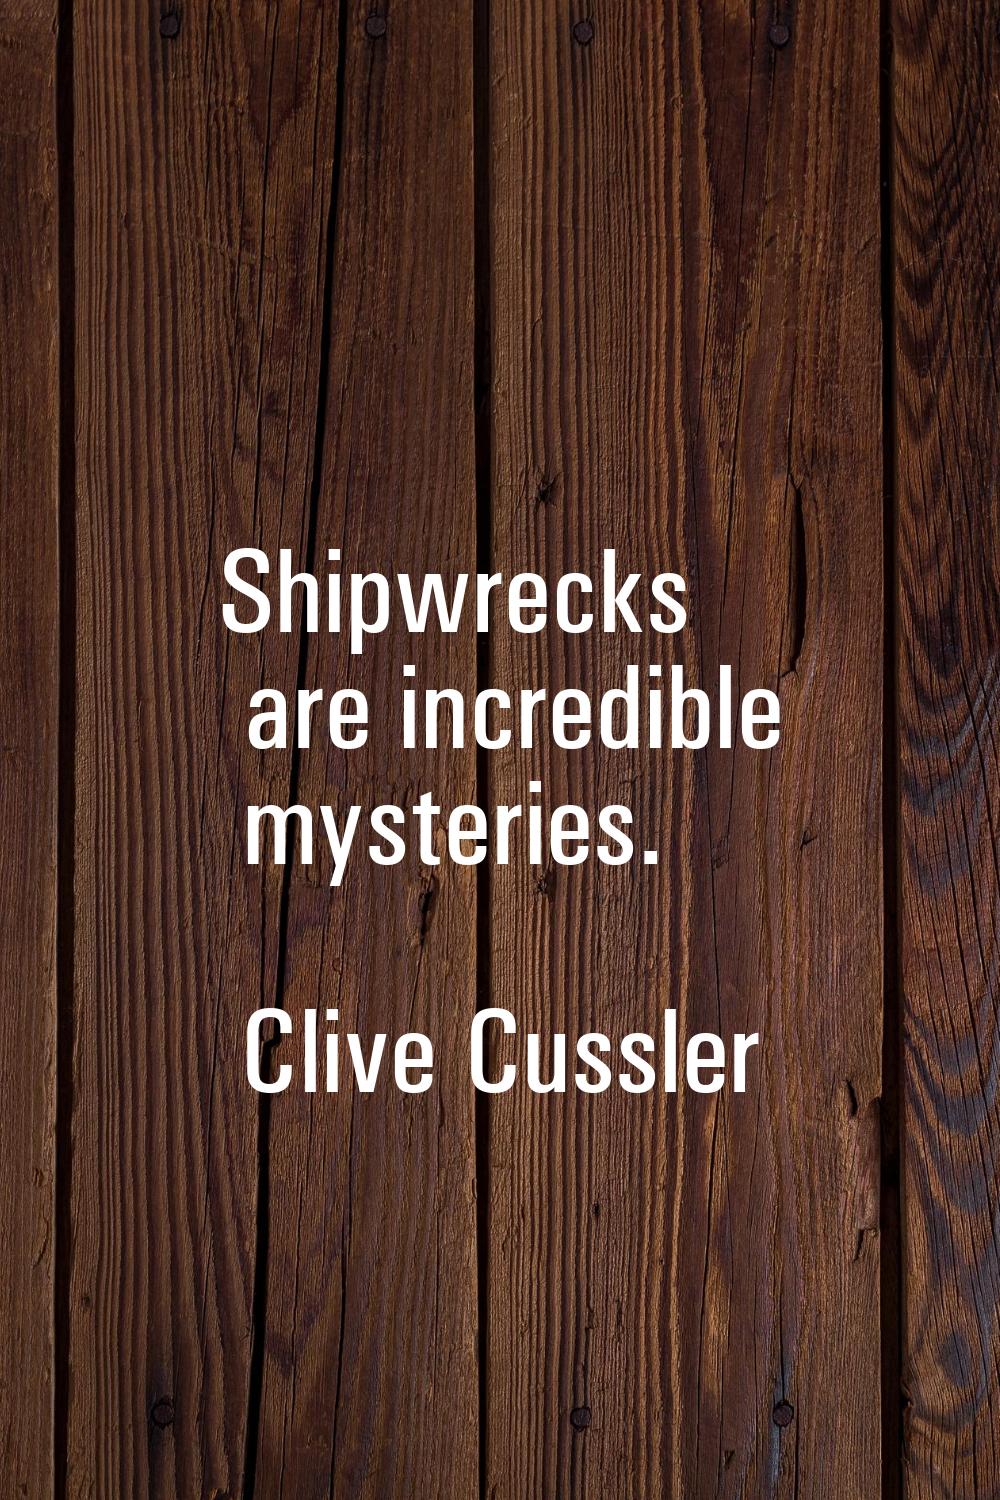 Shipwrecks are incredible mysteries.